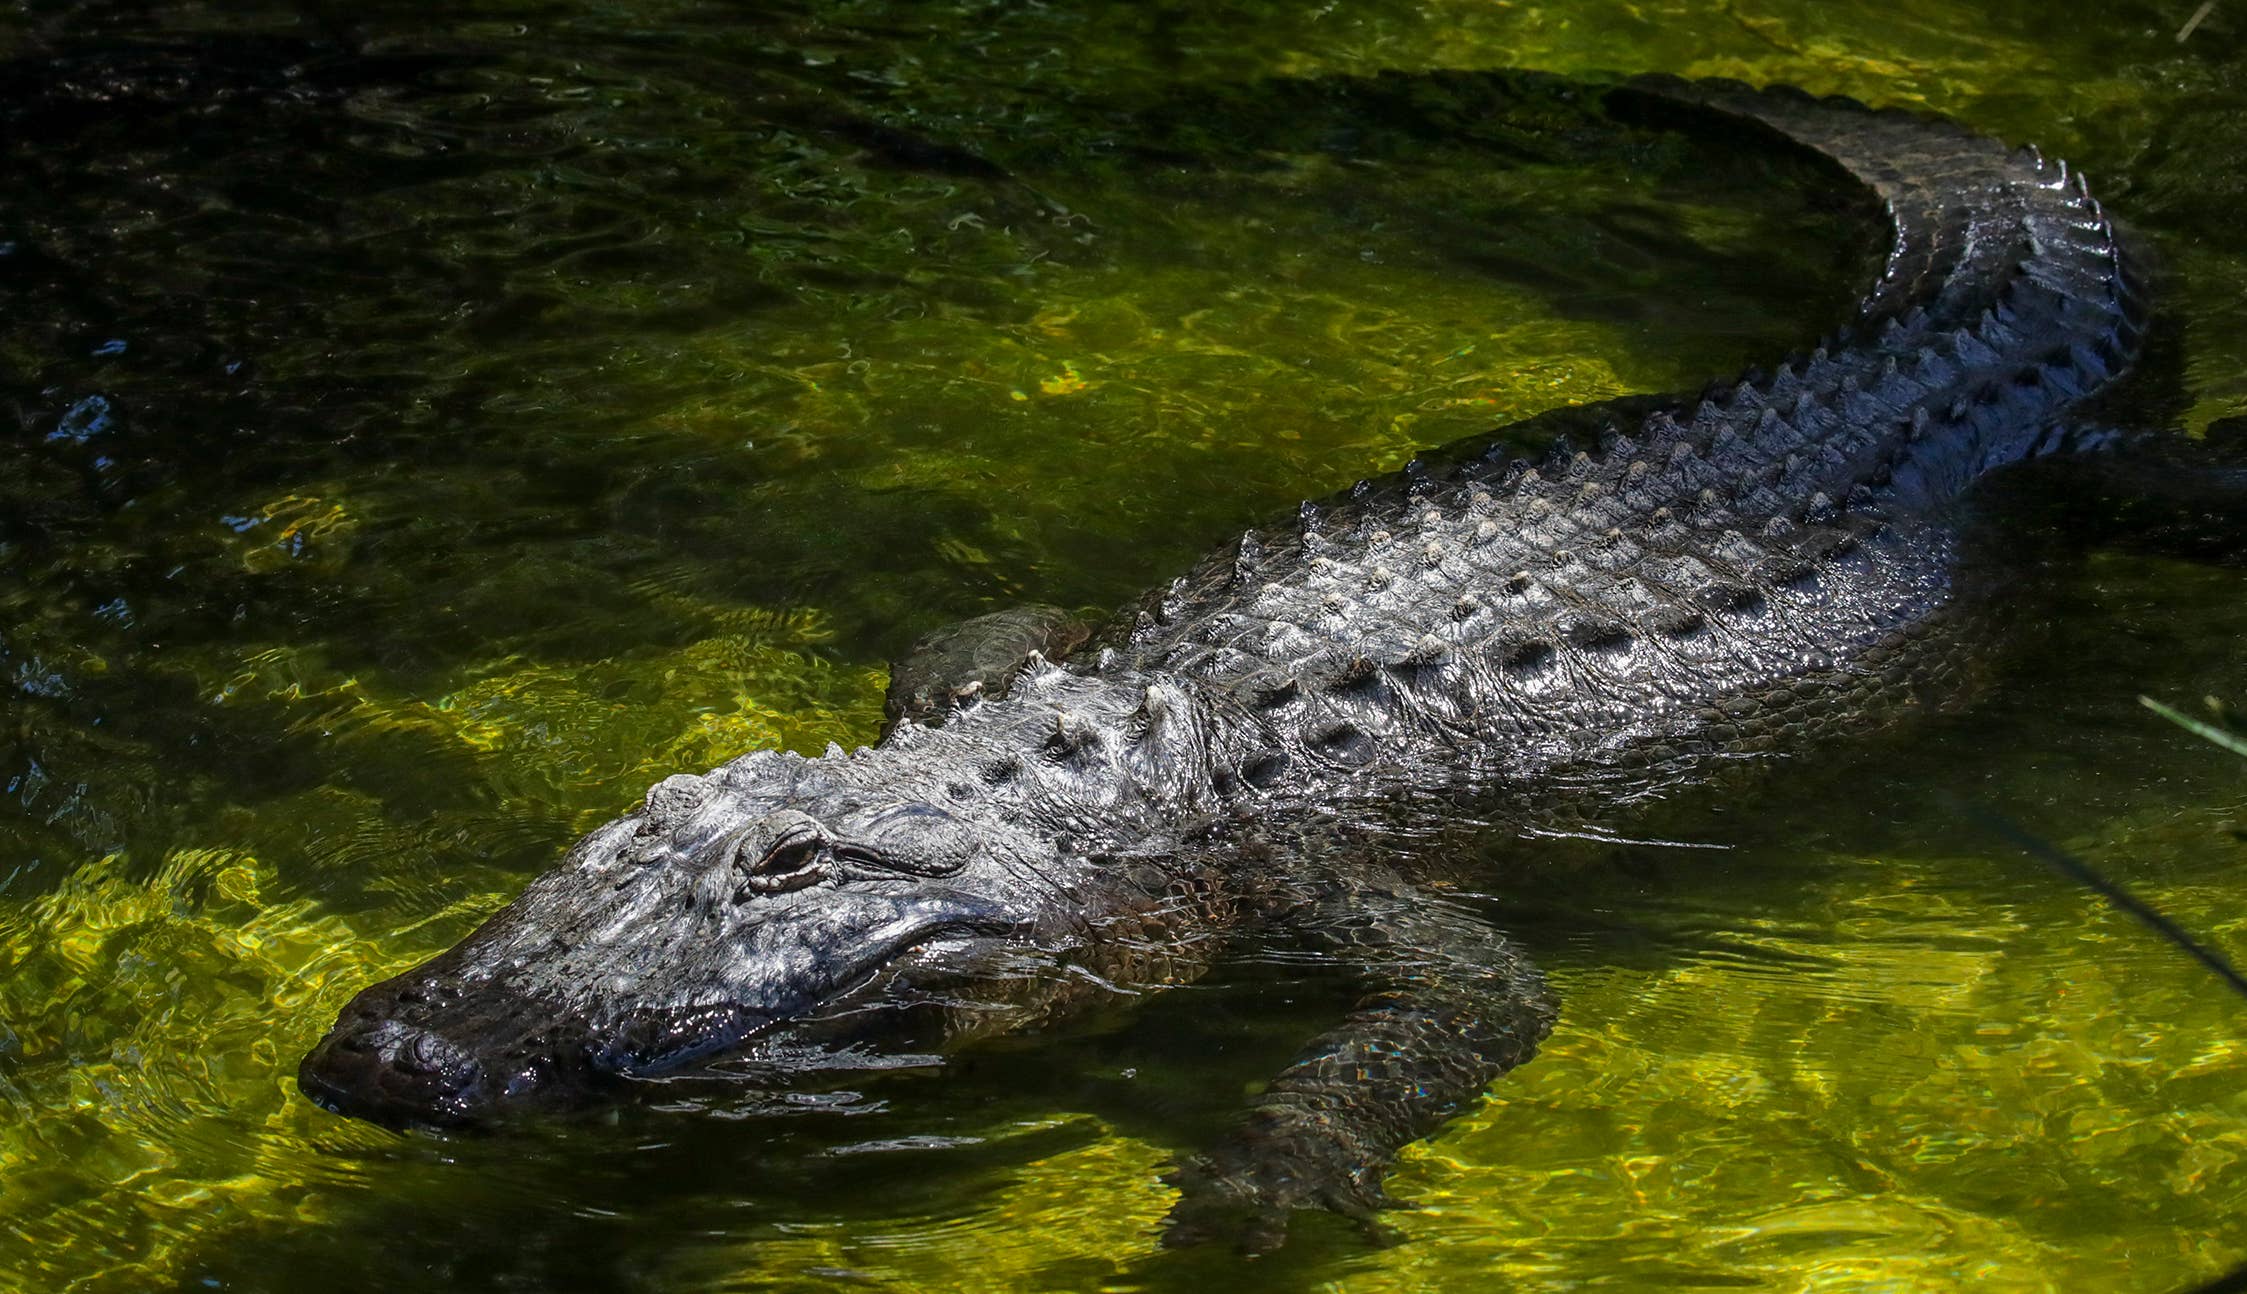 South Carolina man dead after alligator dragged him into Myrtle Beach pond